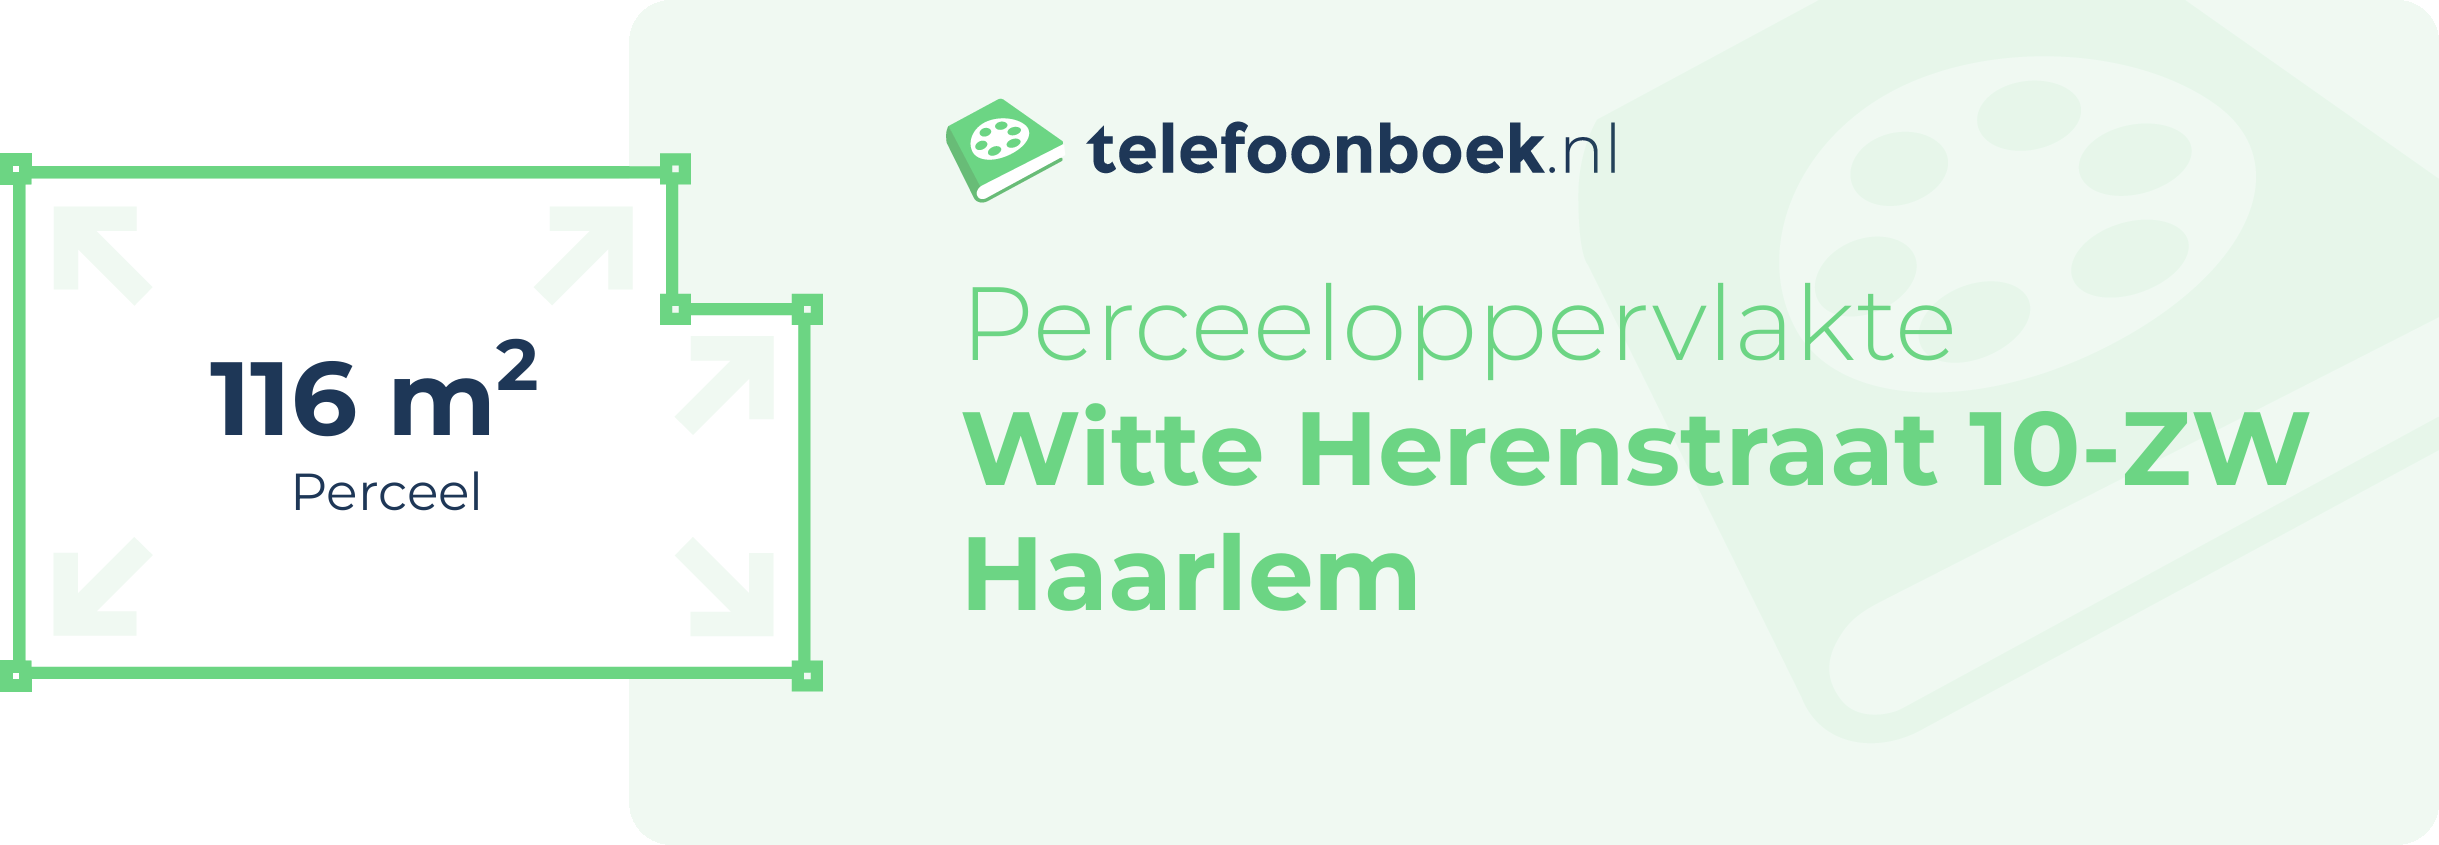 Perceeloppervlakte Witte Herenstraat 10-ZW Haarlem